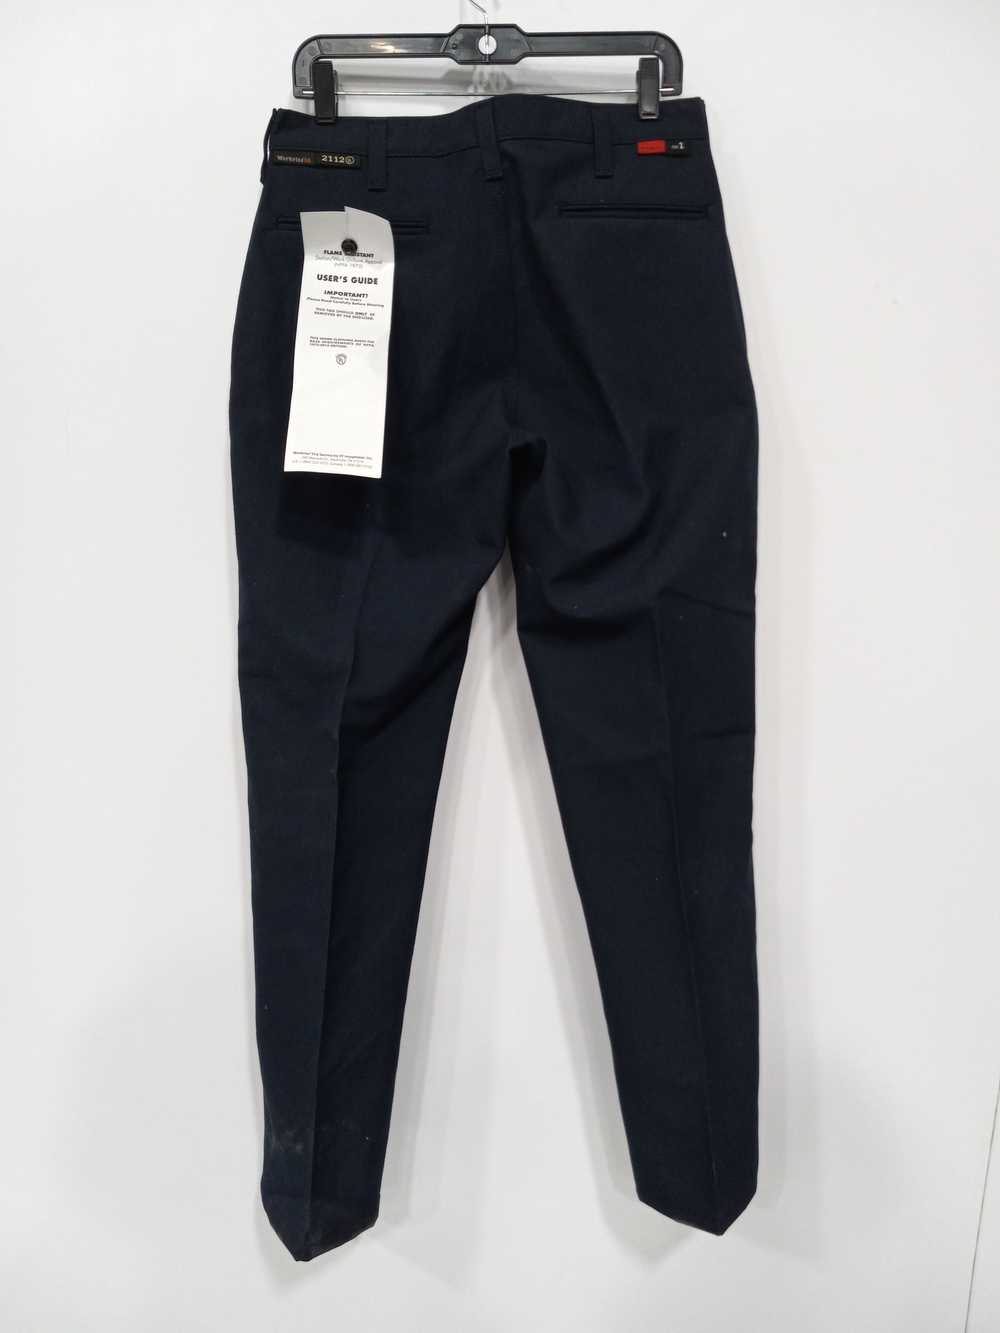 Workrite Flame Resistant Pants Men's Size 32x33 - image 6